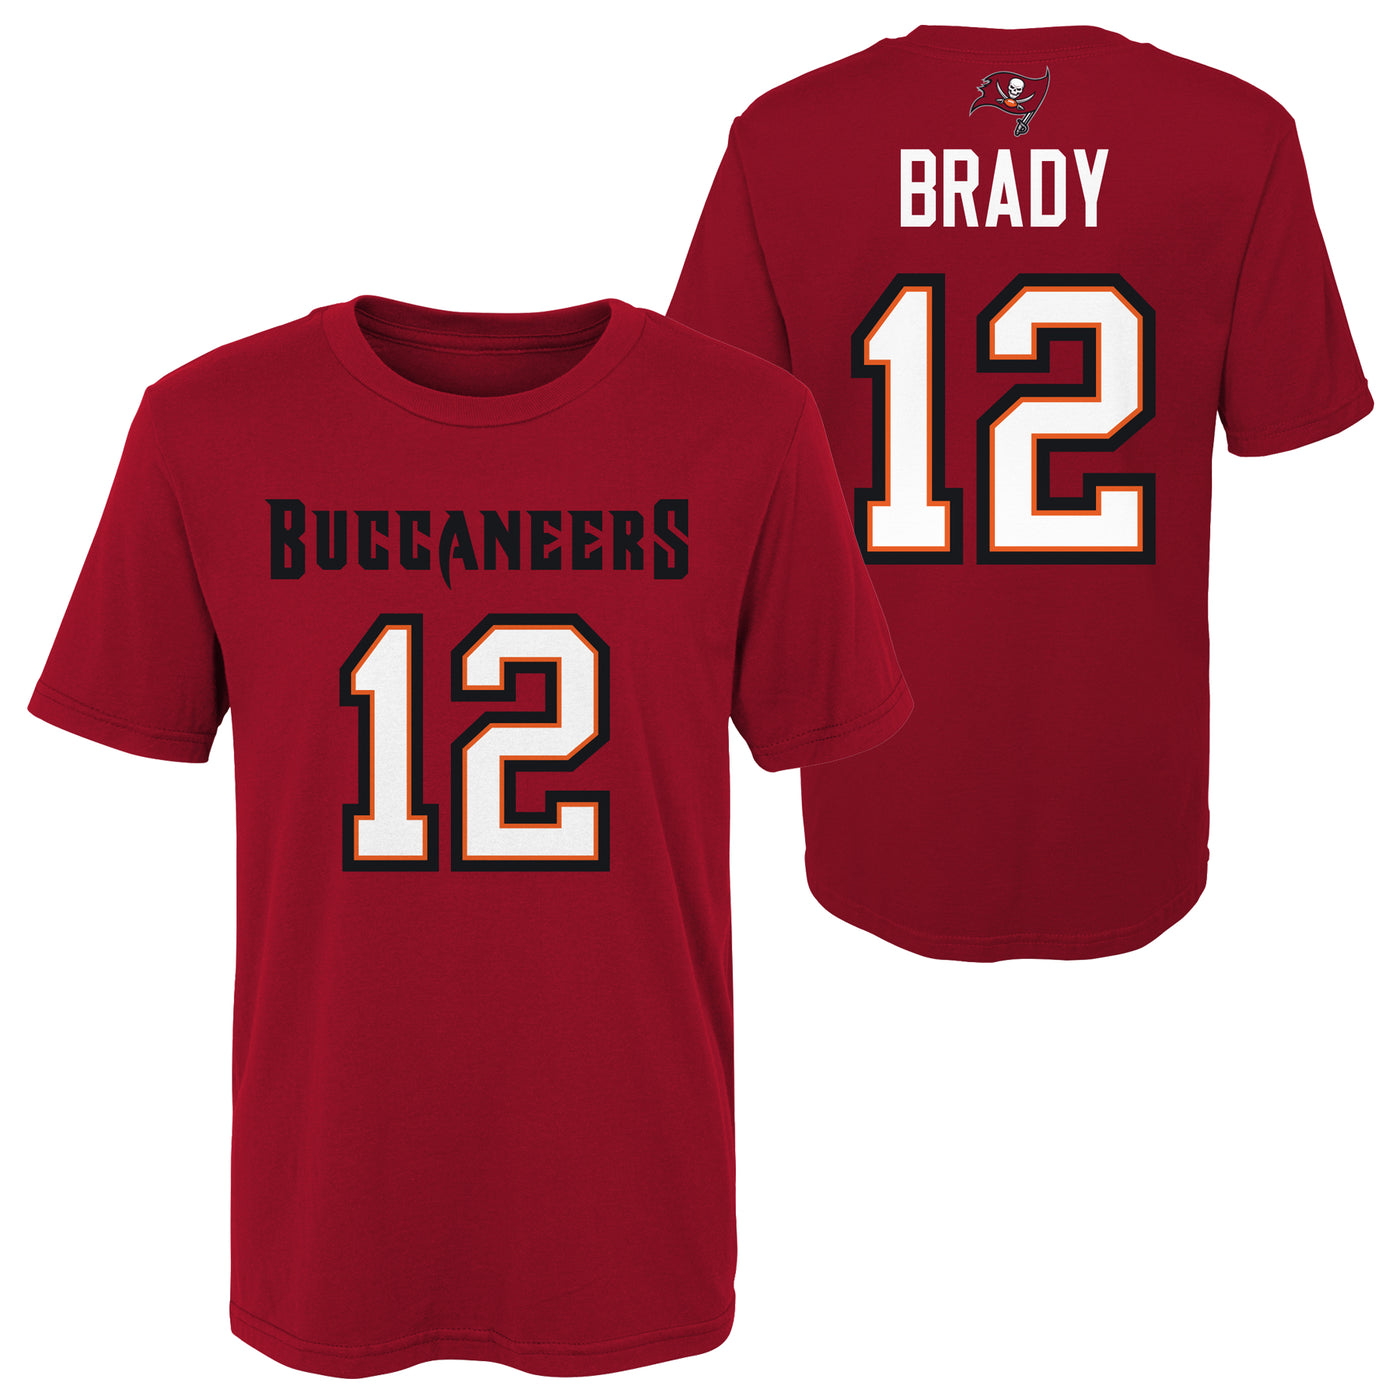 buccaneers brady t shirt